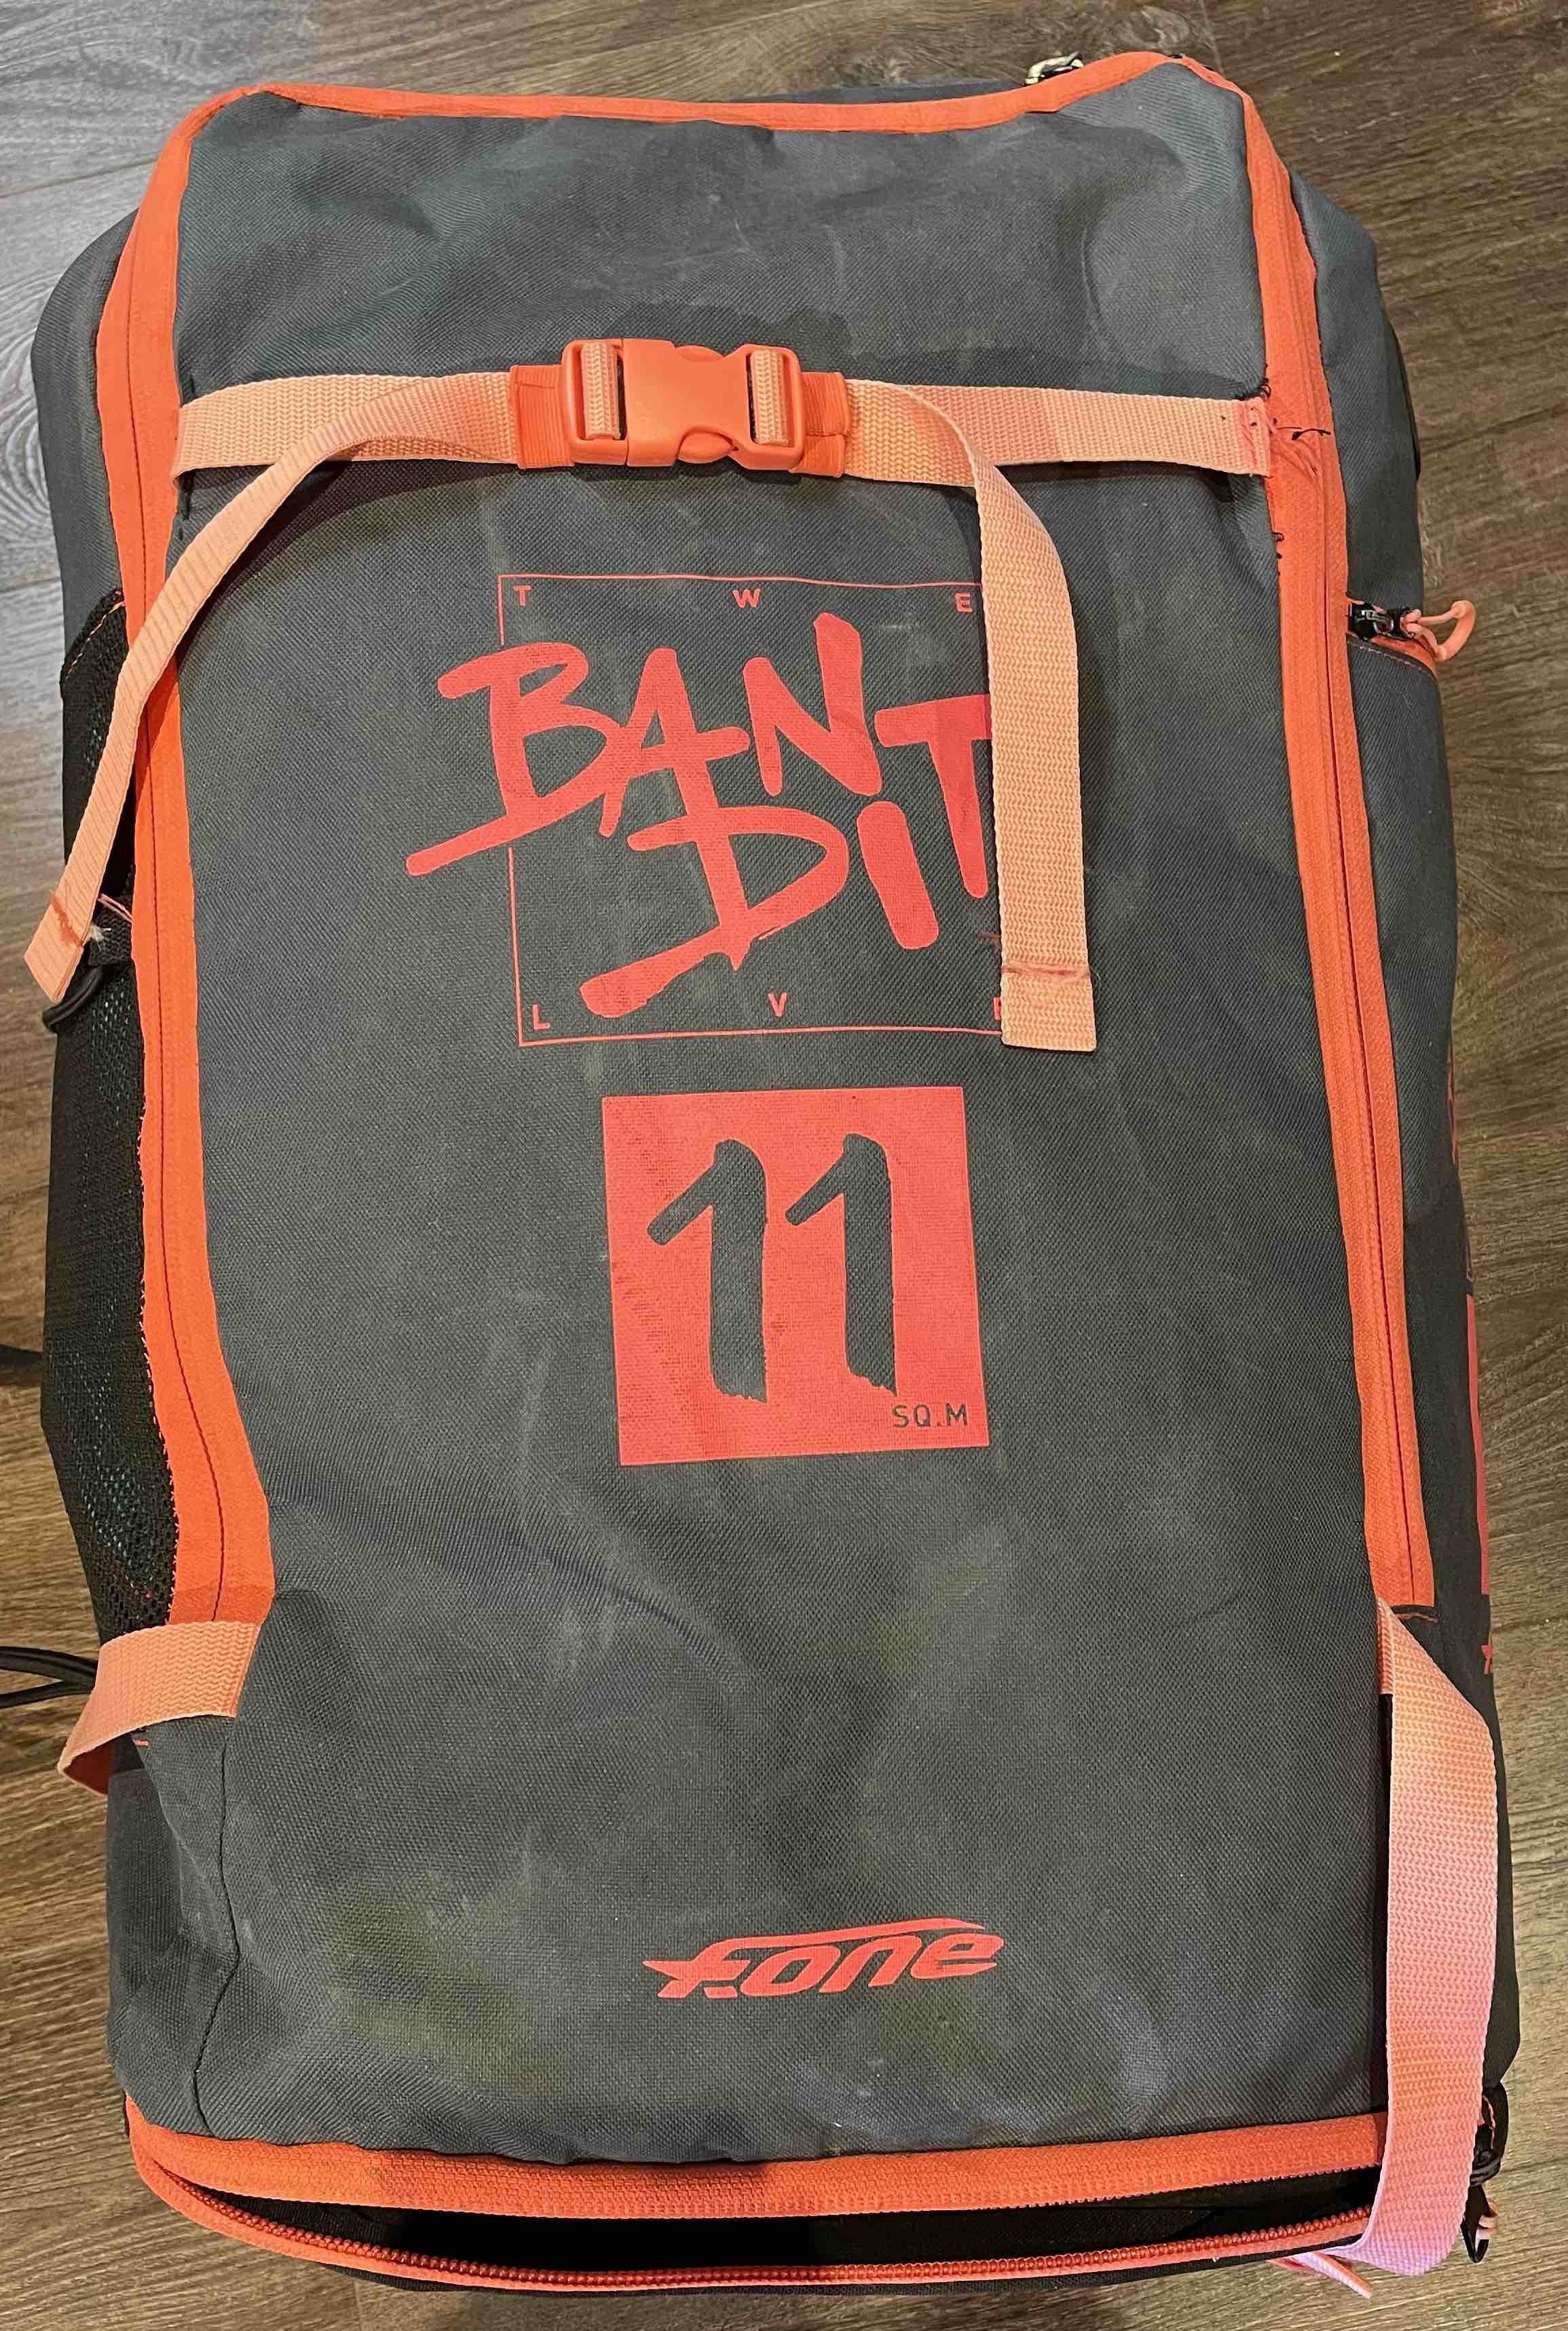 F-One Bandit 11m 2019